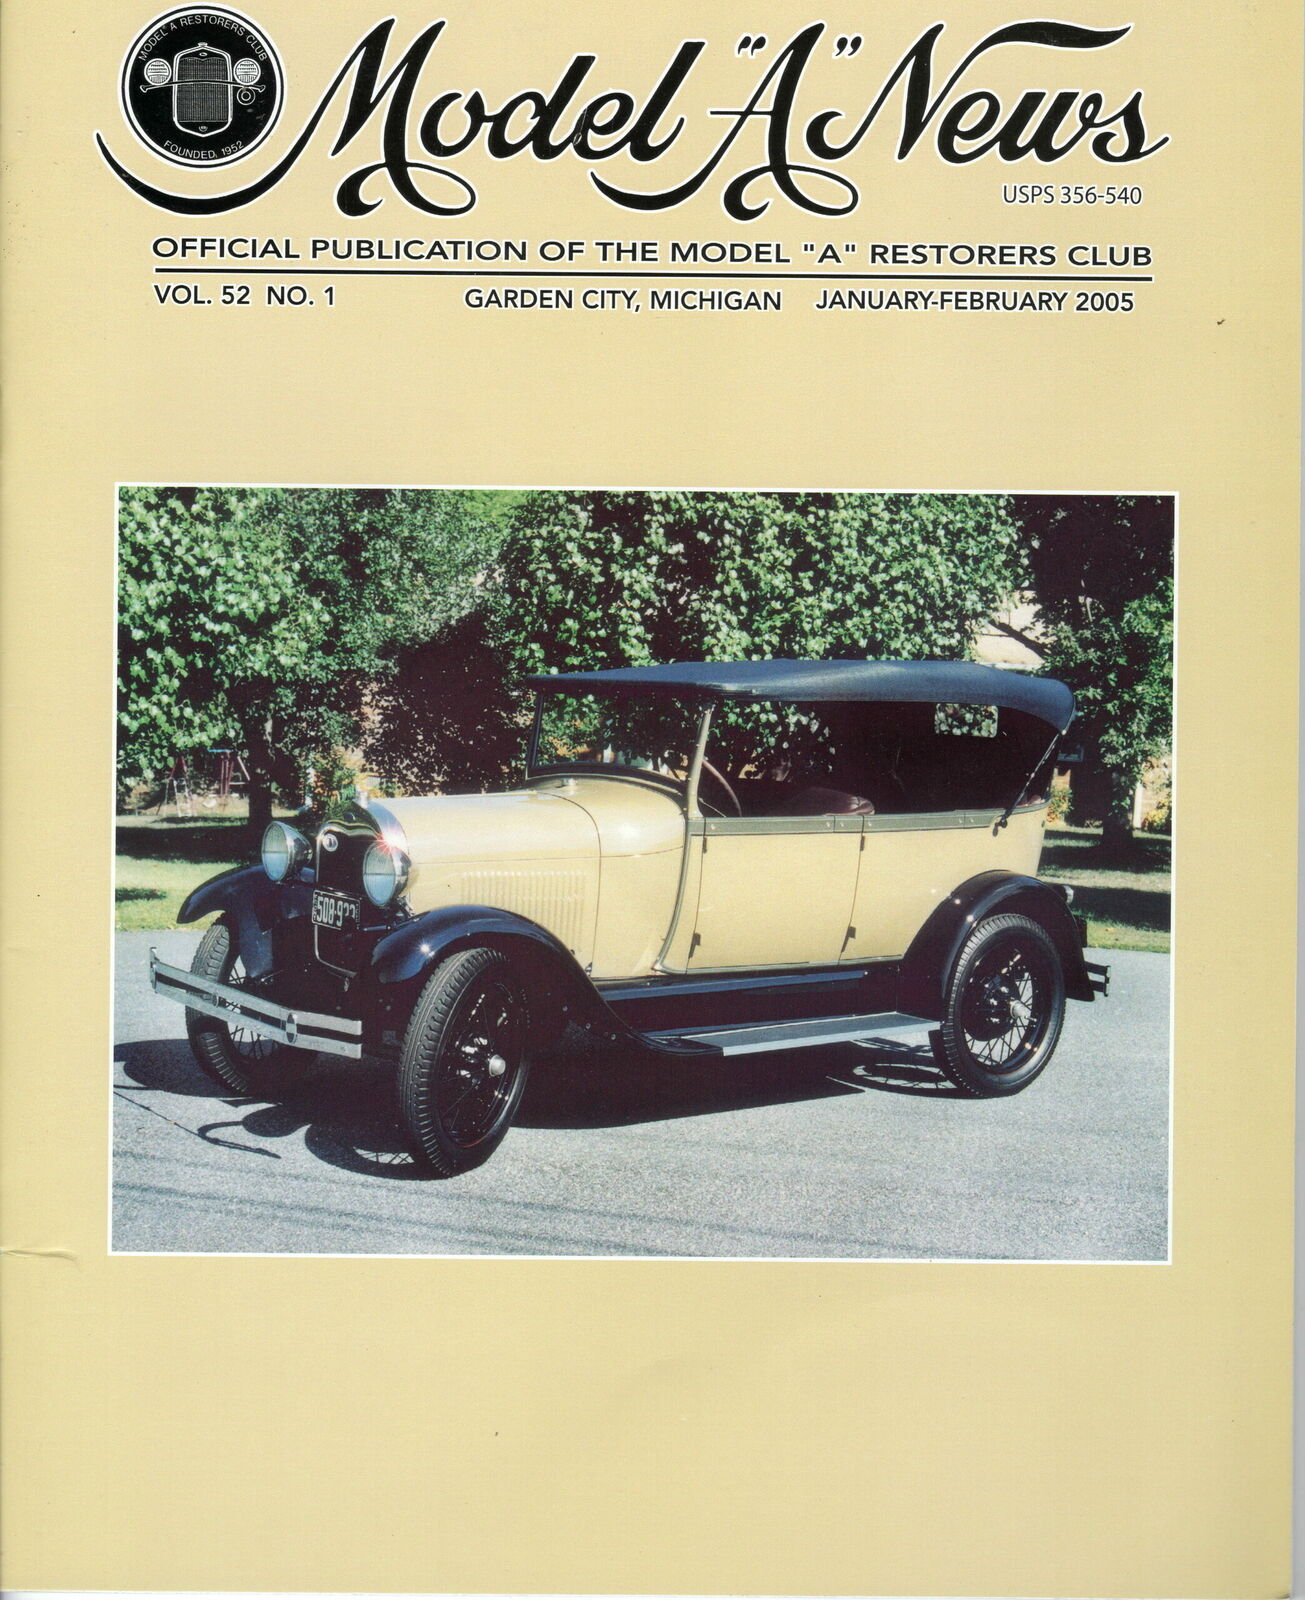 1928 MODEL “A” PHAETON - MODEL “A” NEWS OFFICIAL PUBLICATION VOL. 52 NO.1 2005